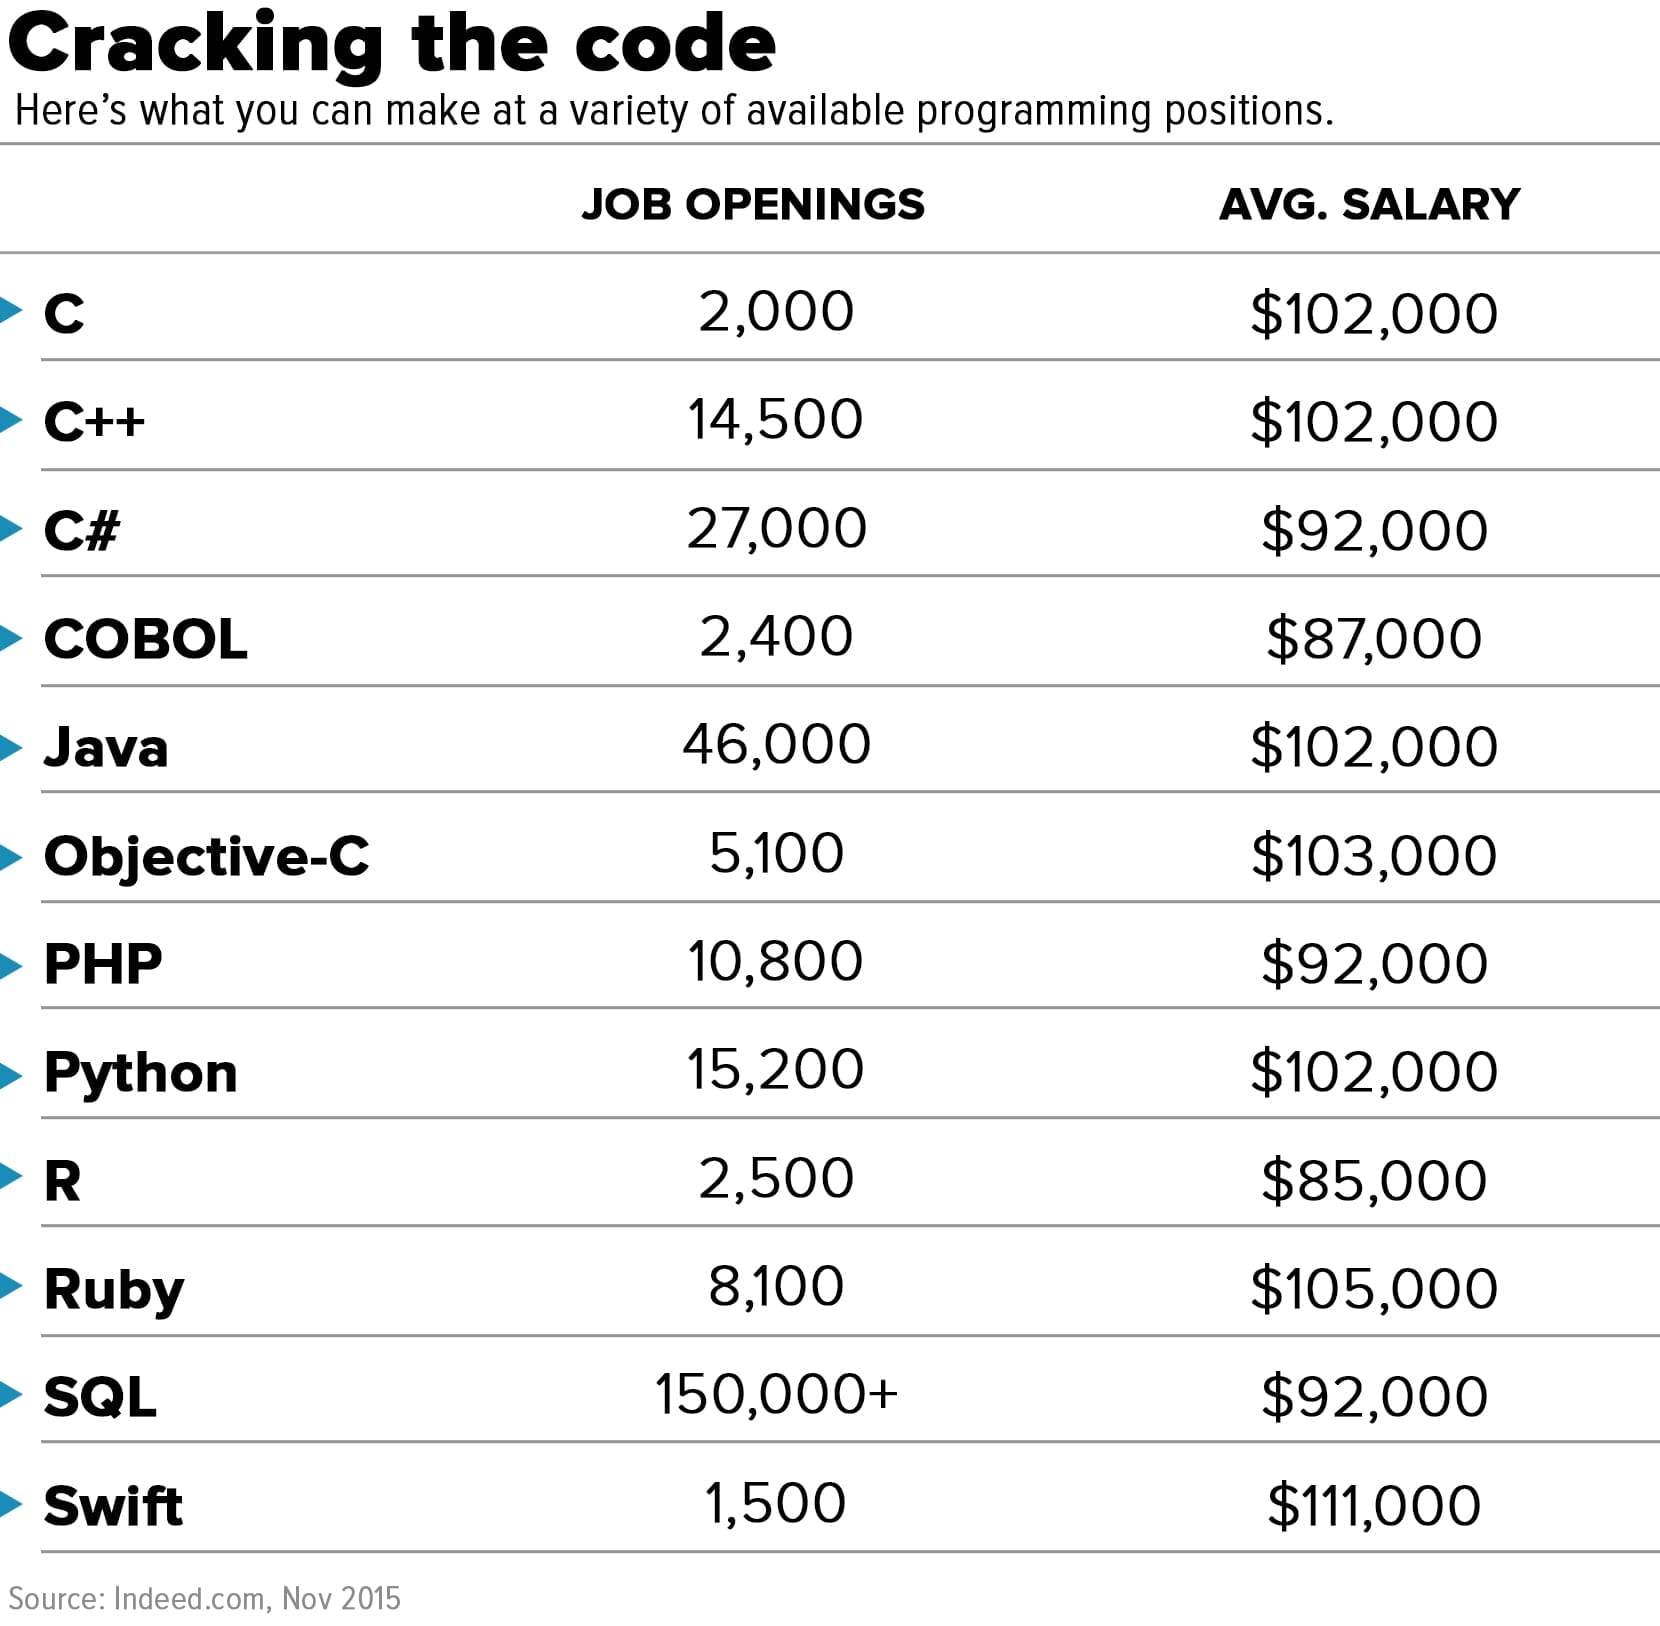 coding languages